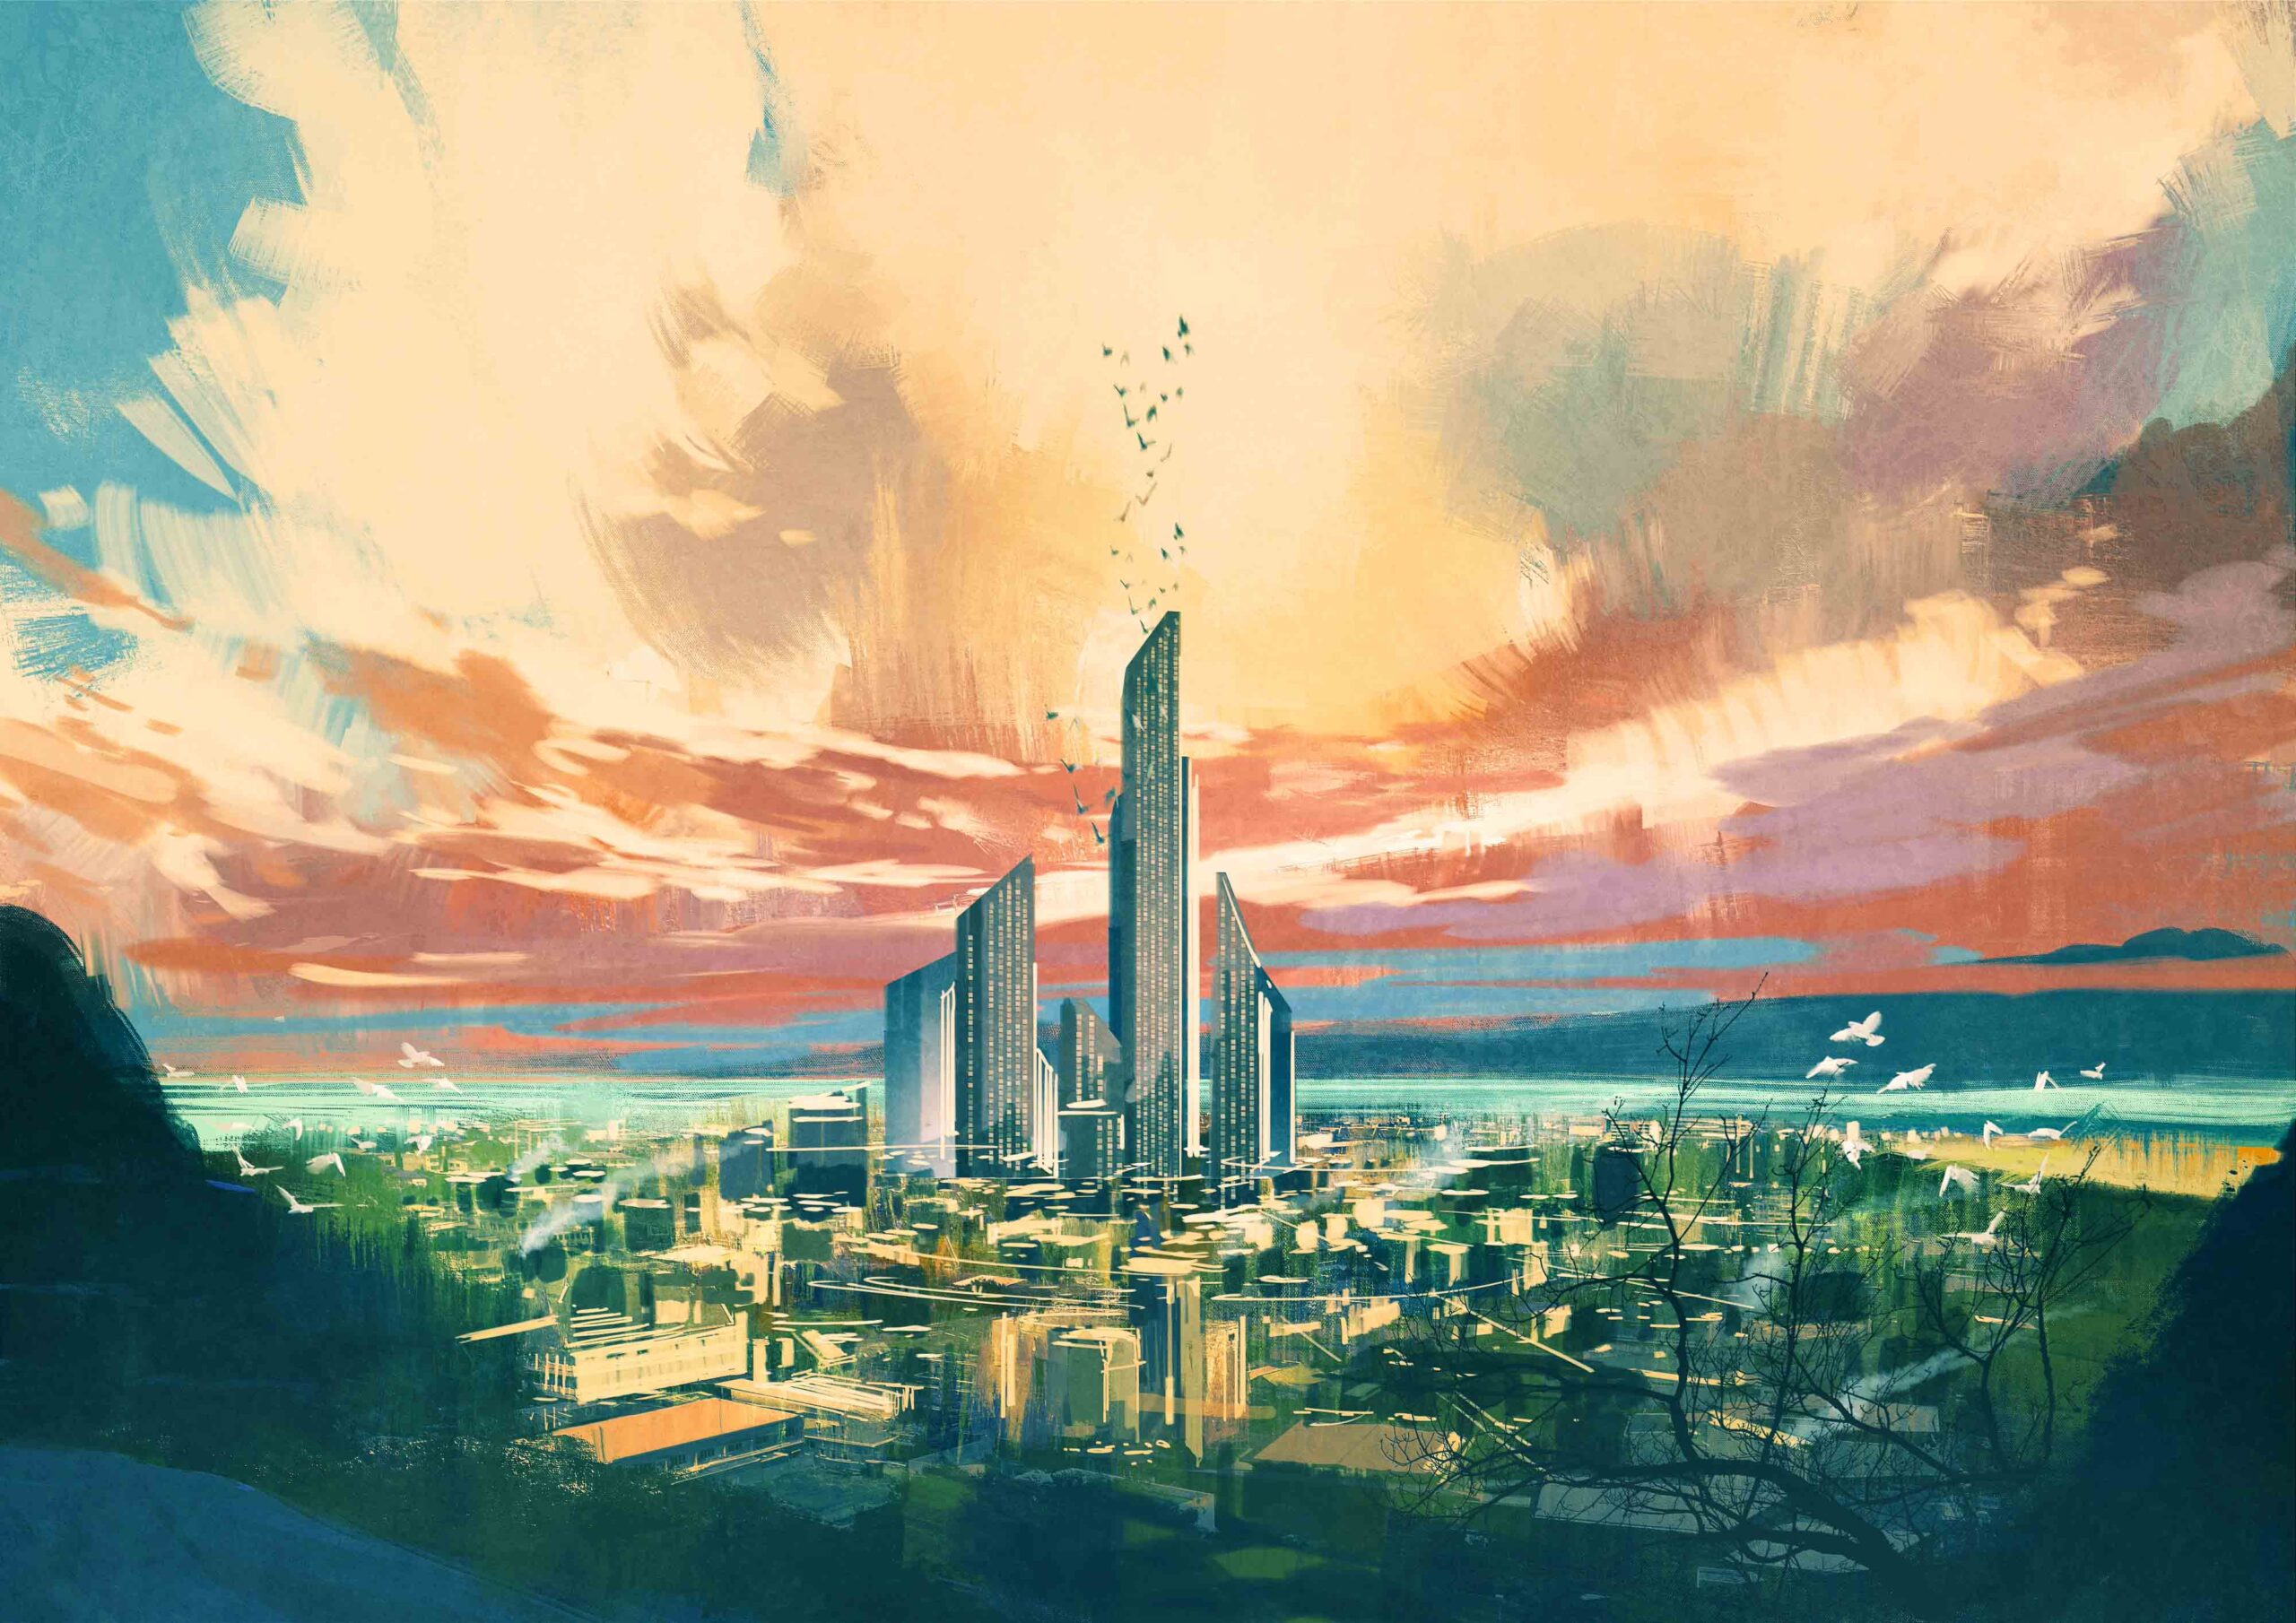 digital illustration of futuristic sci-fi city with skyscraper at sunset